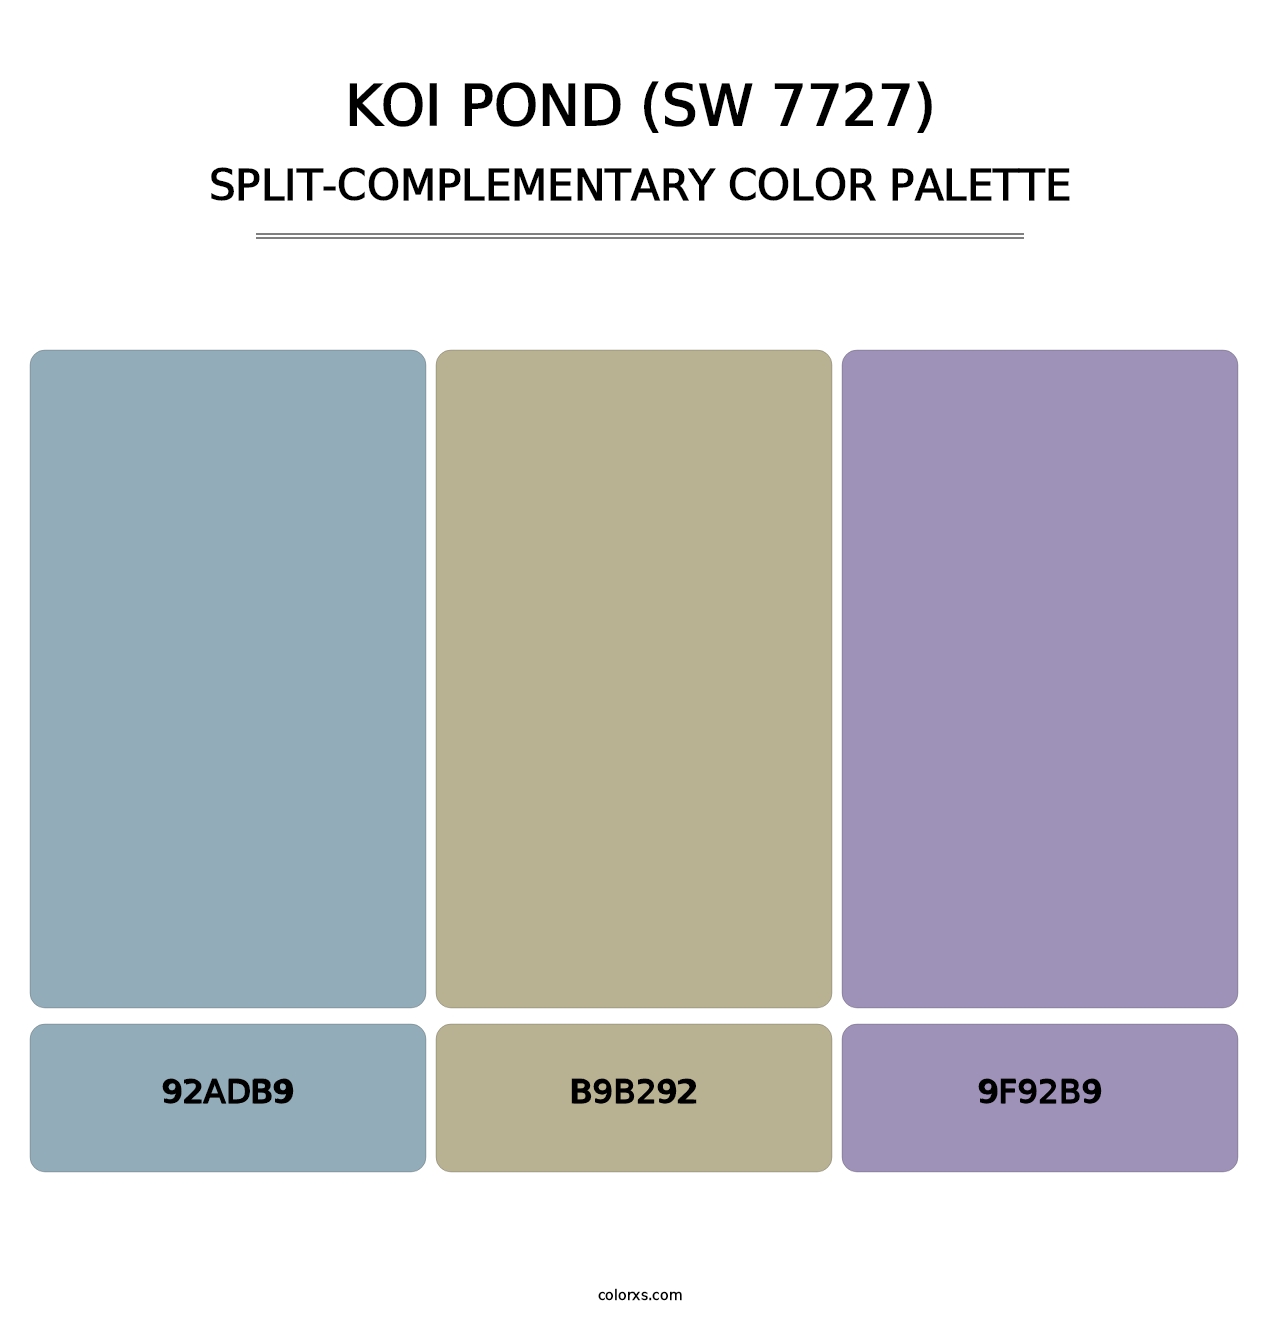 Koi Pond (SW 7727) - Split-Complementary Color Palette